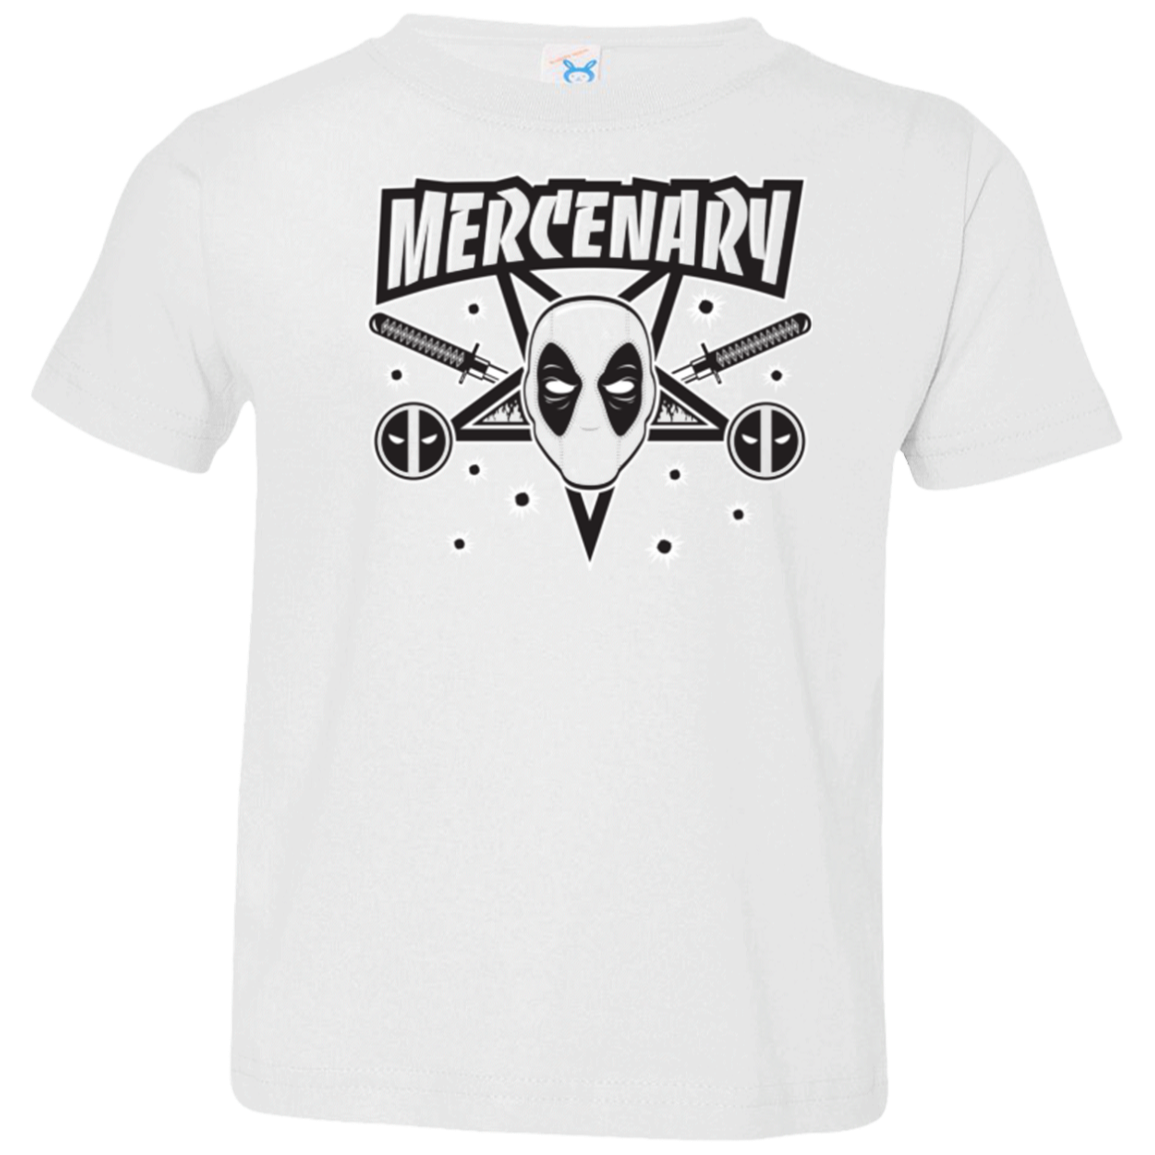 Mercenary (1) Toddler Premium T-Shirt